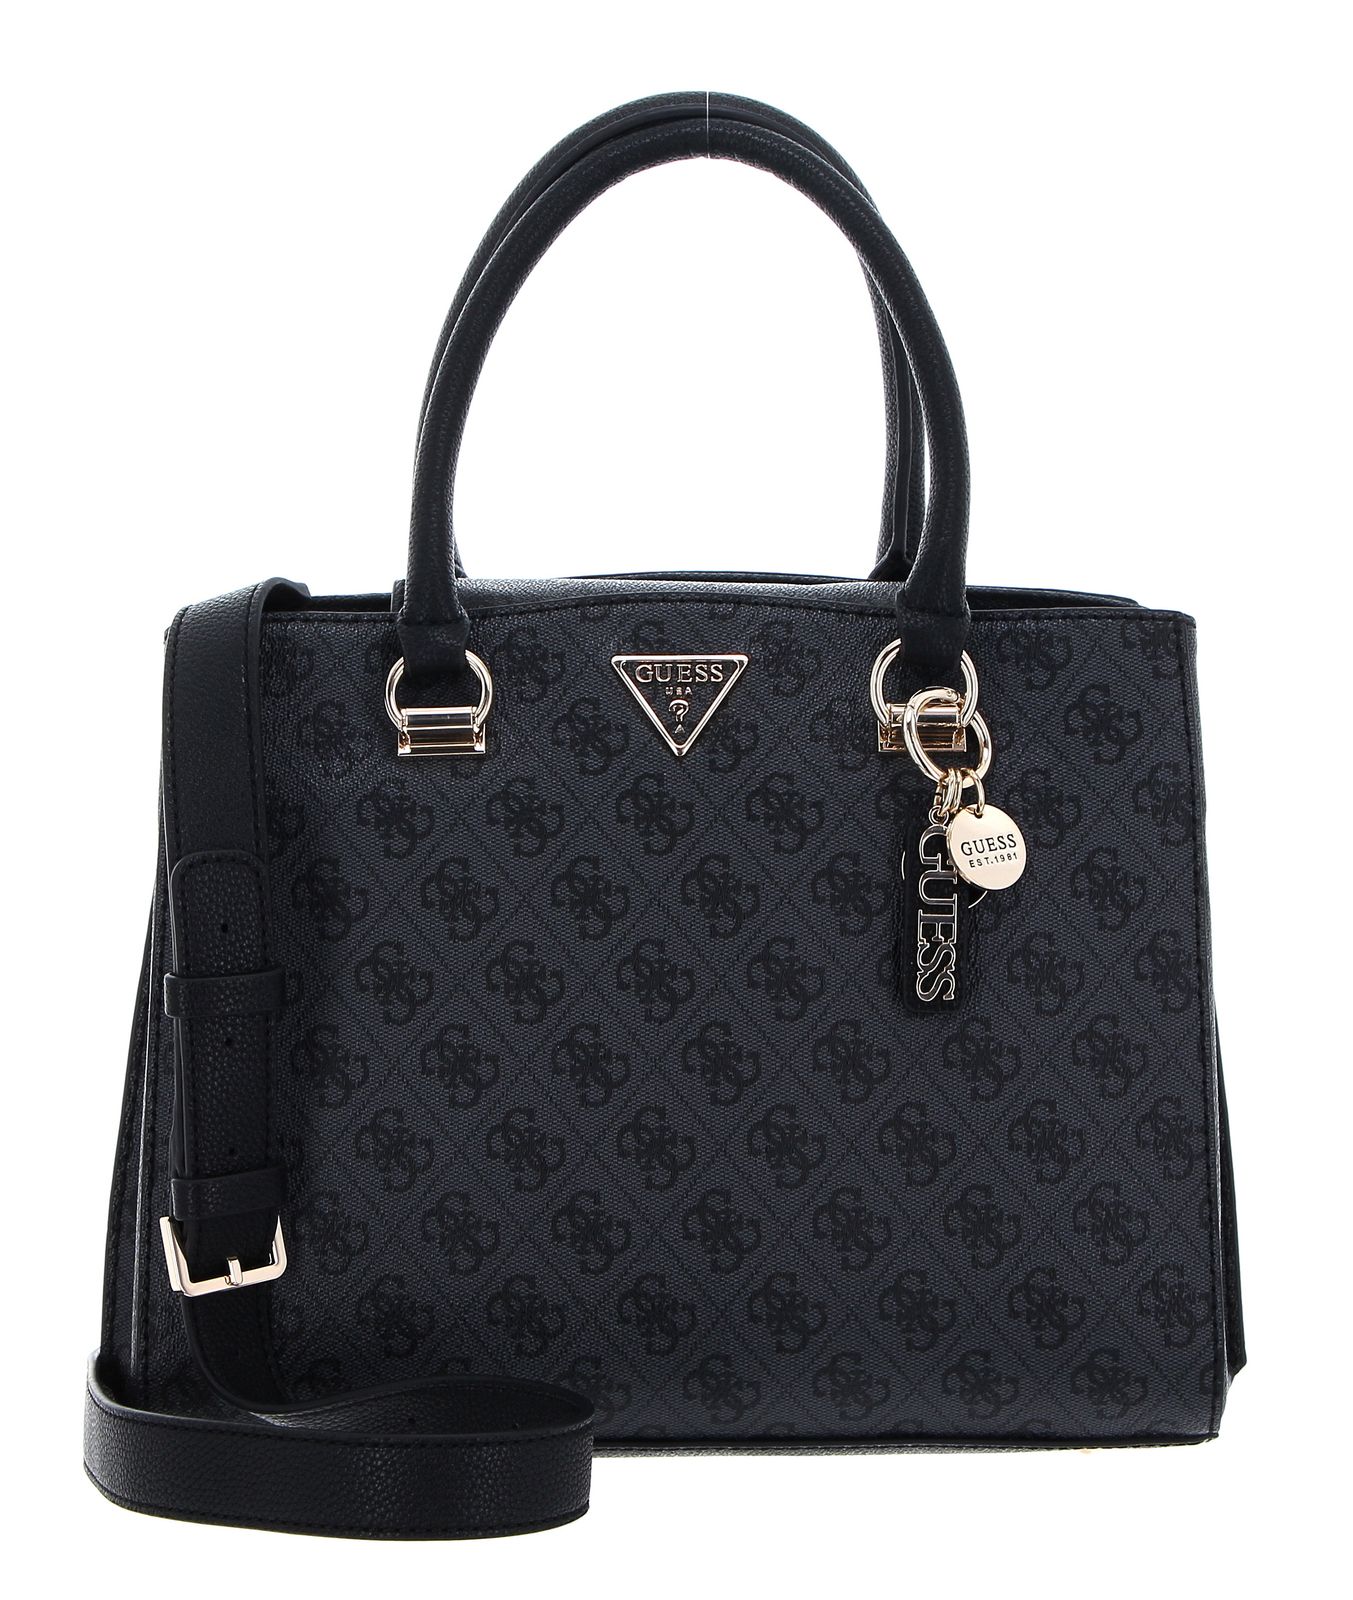 GUESS handbag Noelle Girlfriend Satchel Coal Logo | Buy bags, purses ...